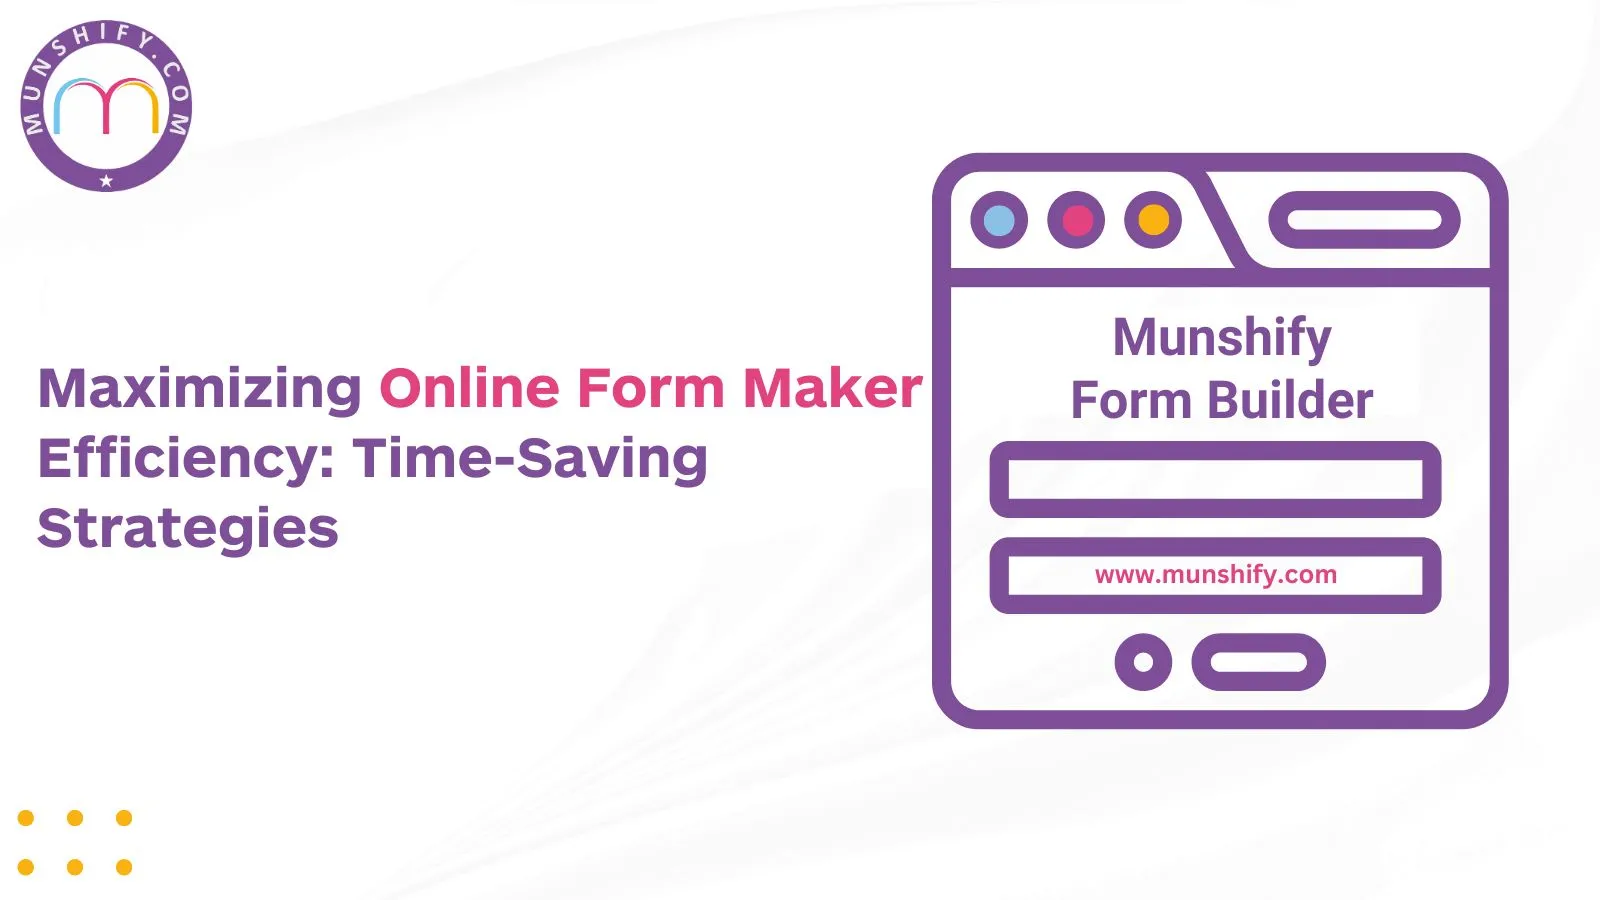 Maximizing Online Form Maker Efficiency: Time-Saving Strategies